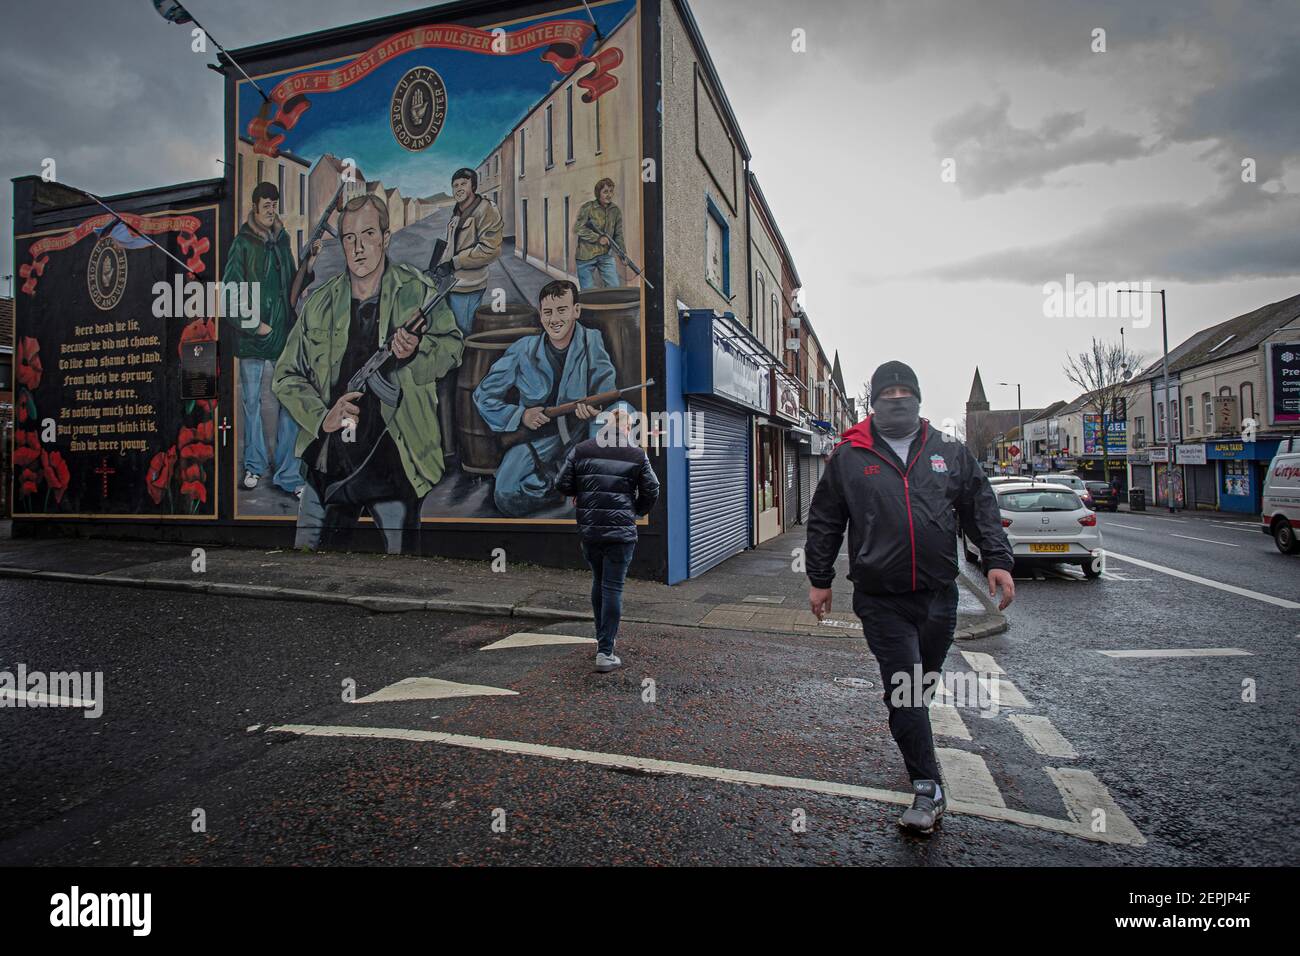 WEST BELFAST, NORDIRLAND - West Belfast, Shankill Road - man spaziert am Ulster Volunteer Force Wandbild vorbei. Stockfoto